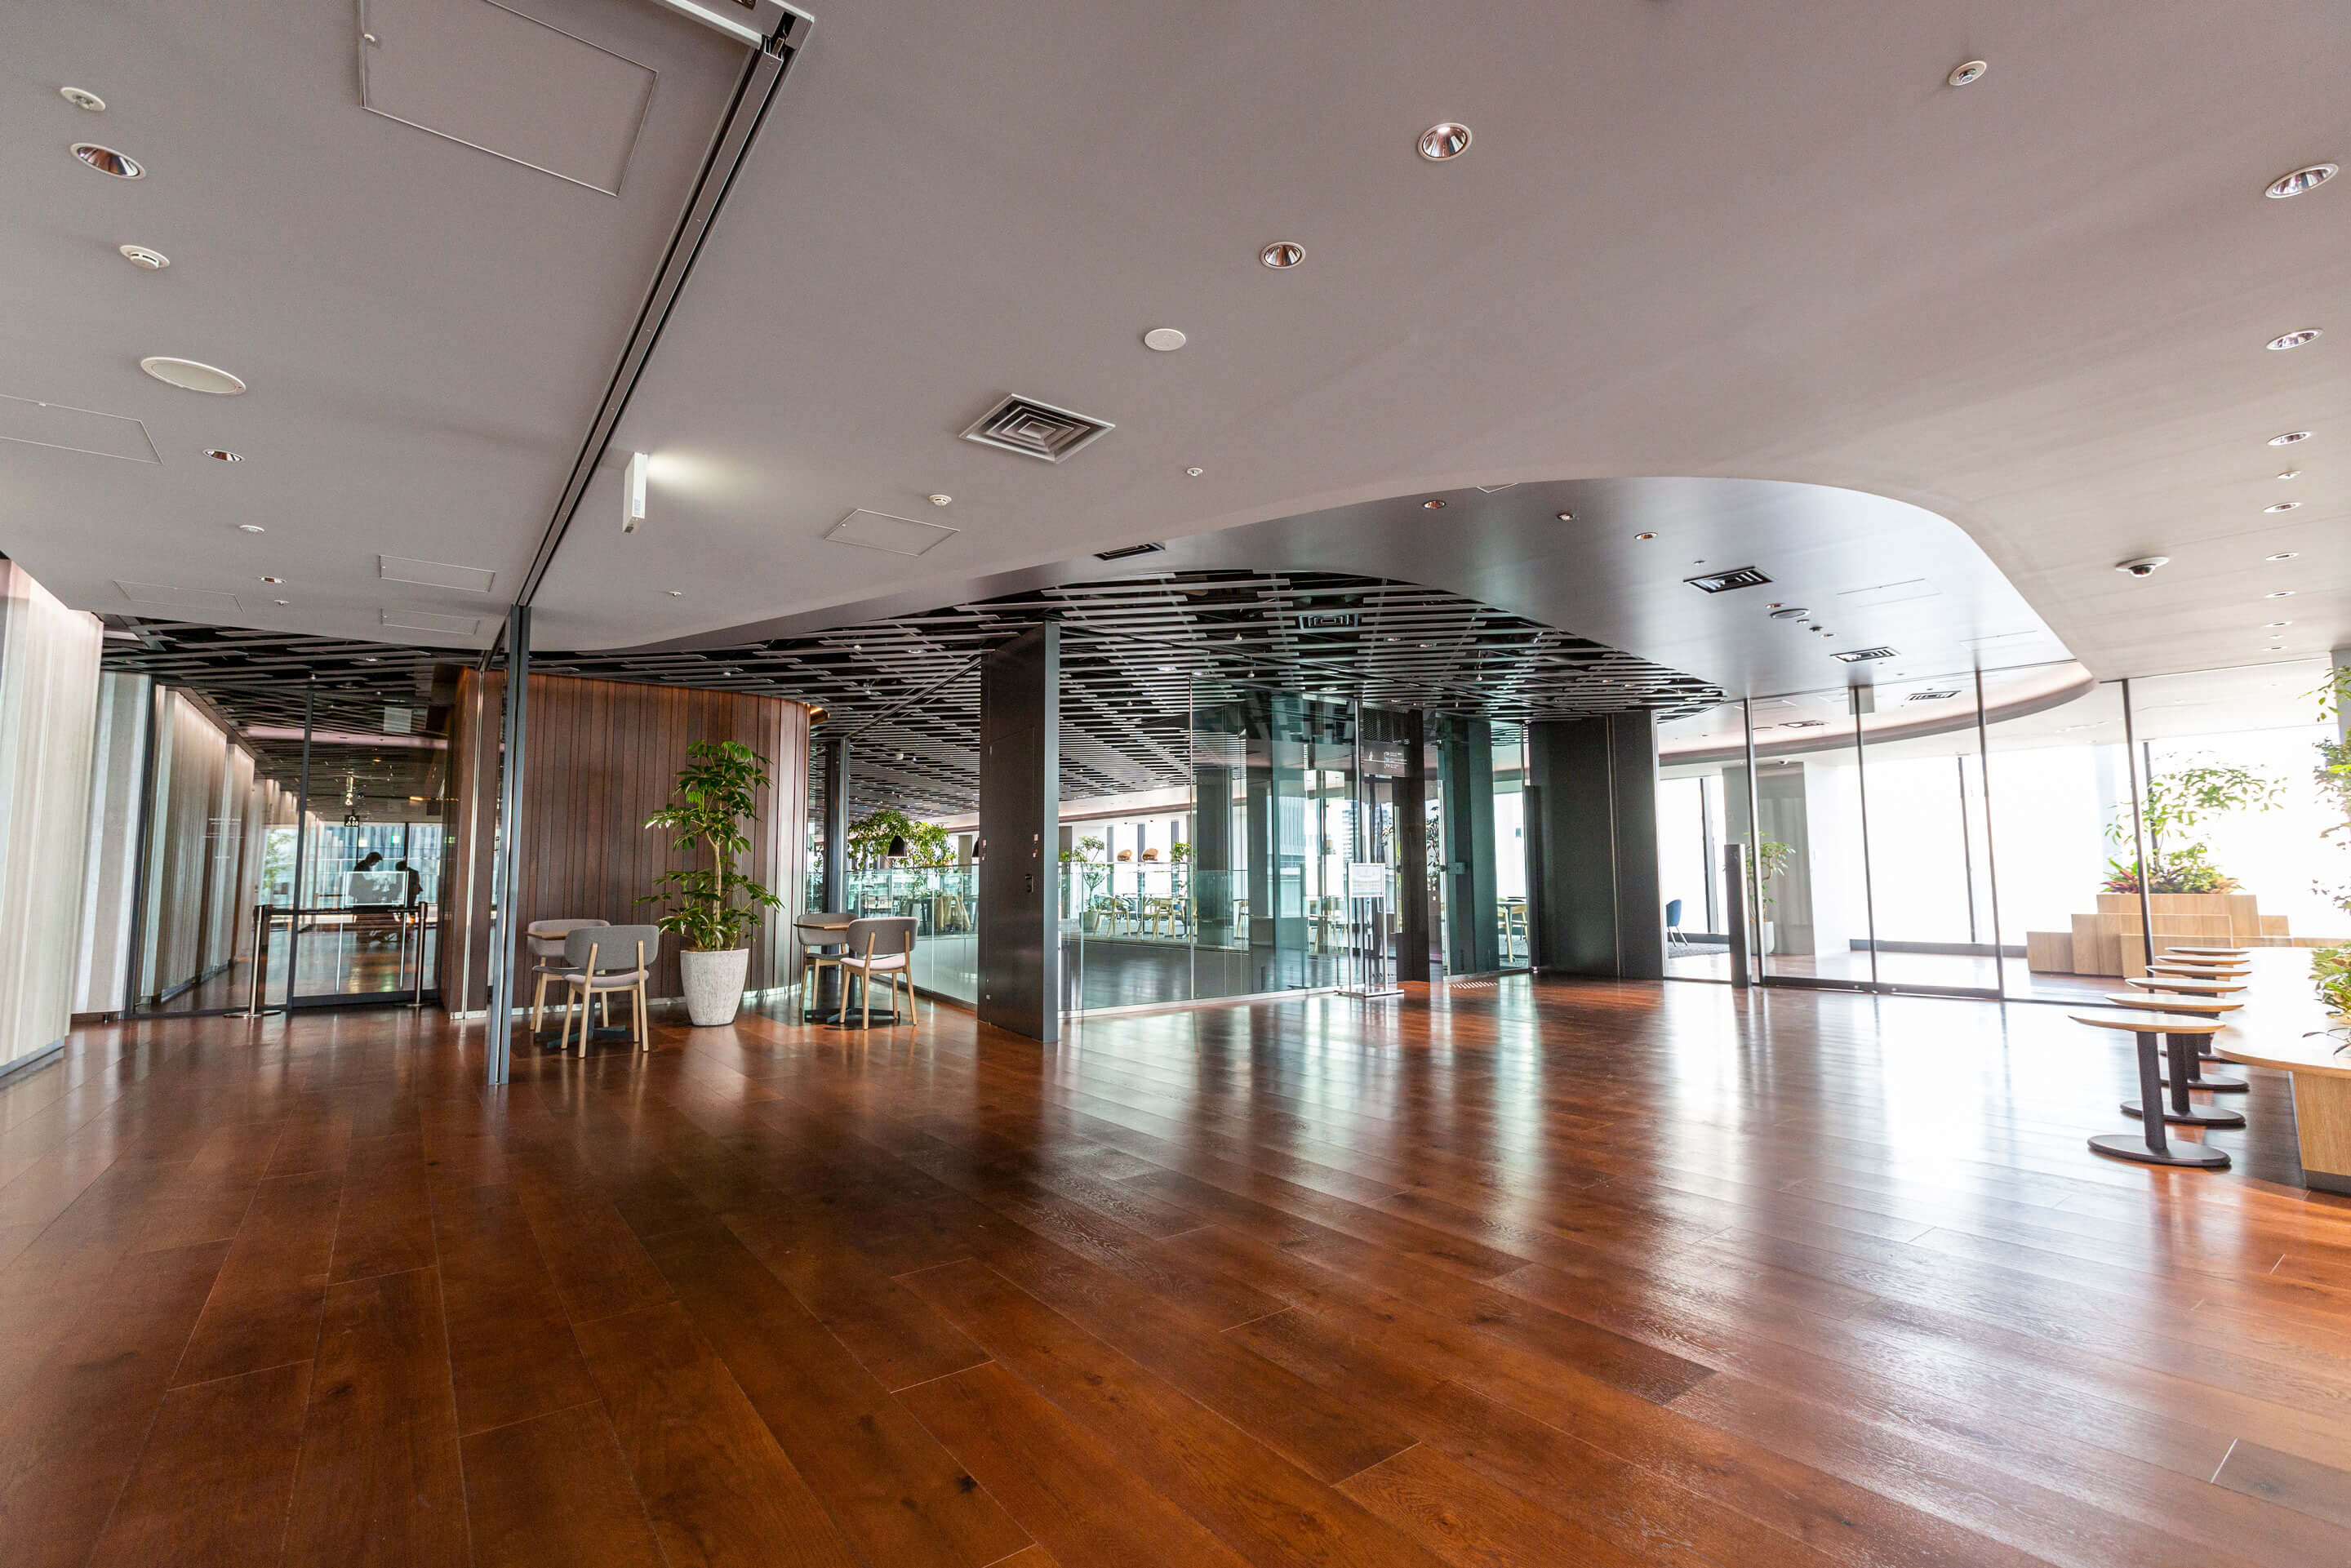 Dedicated floor for office workers